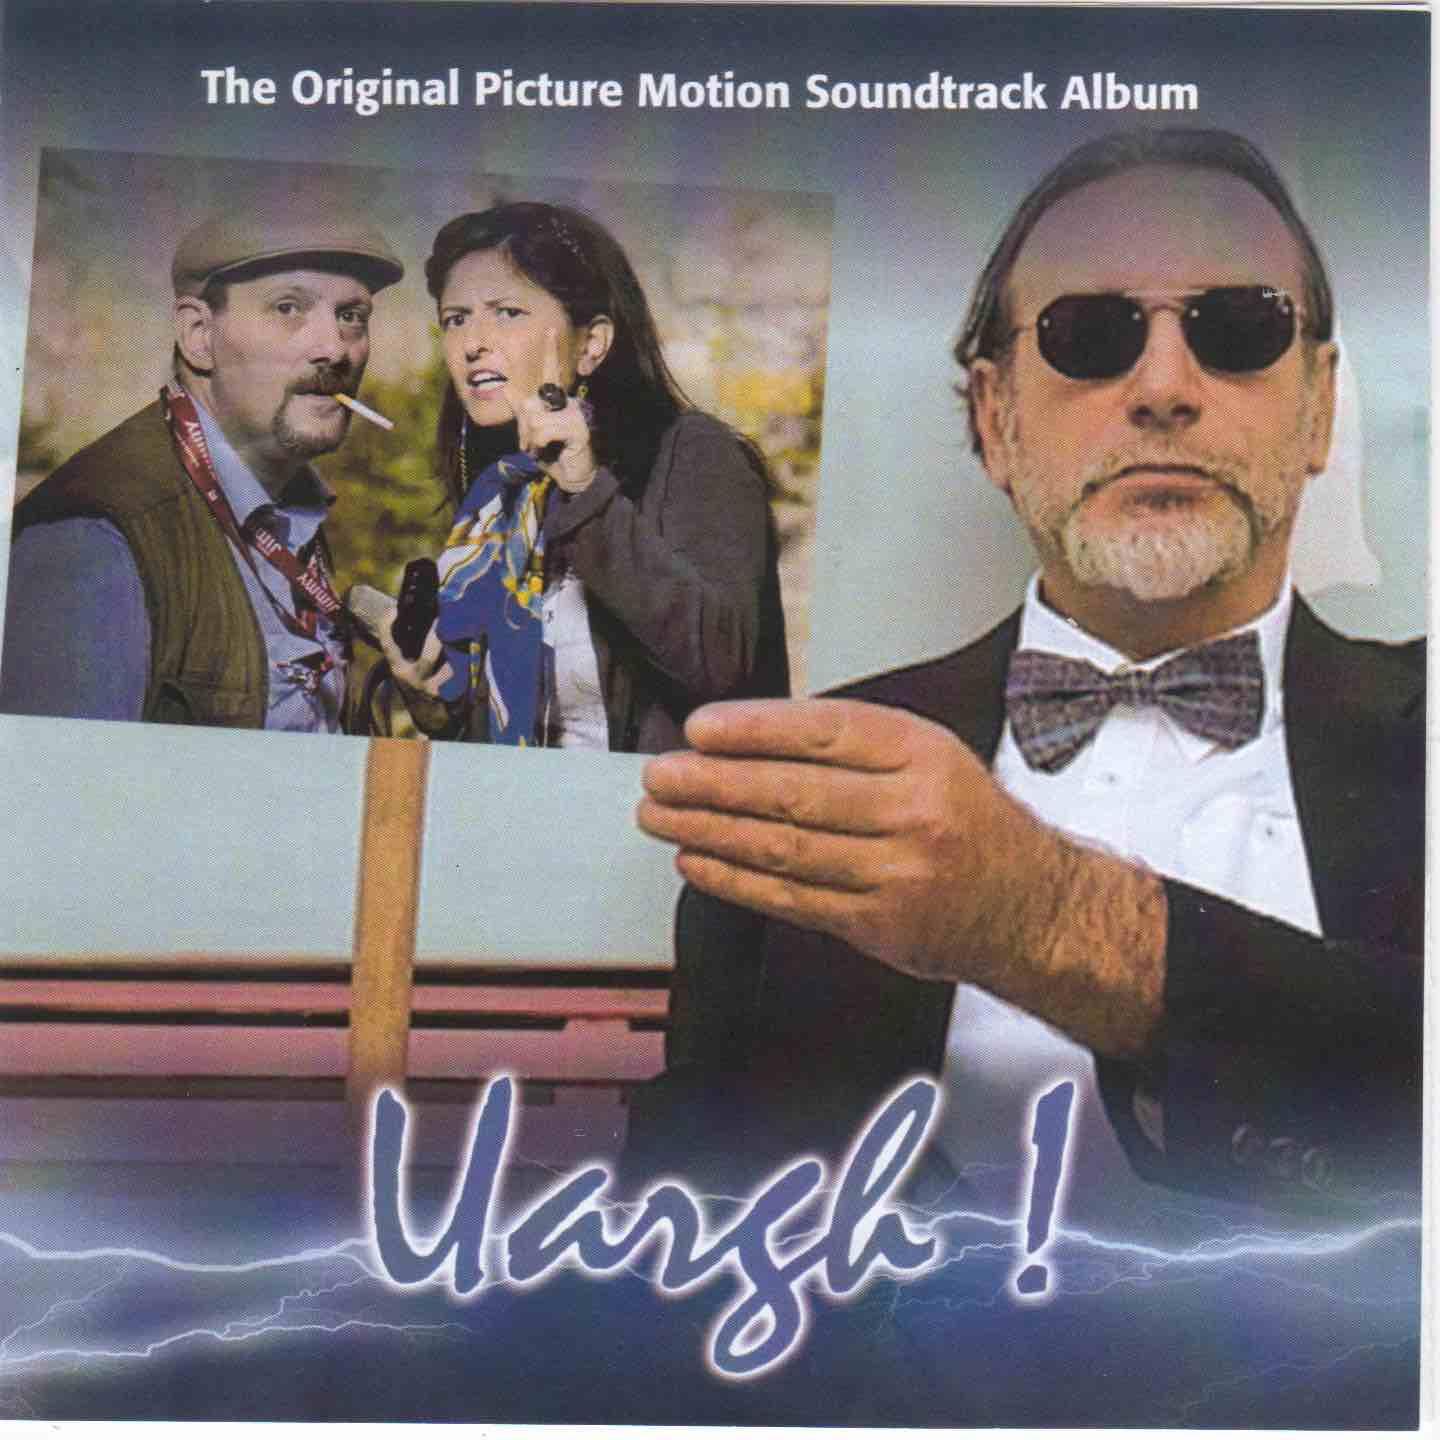 Uargh ! - The Original Picture Motion Soundtrack Album